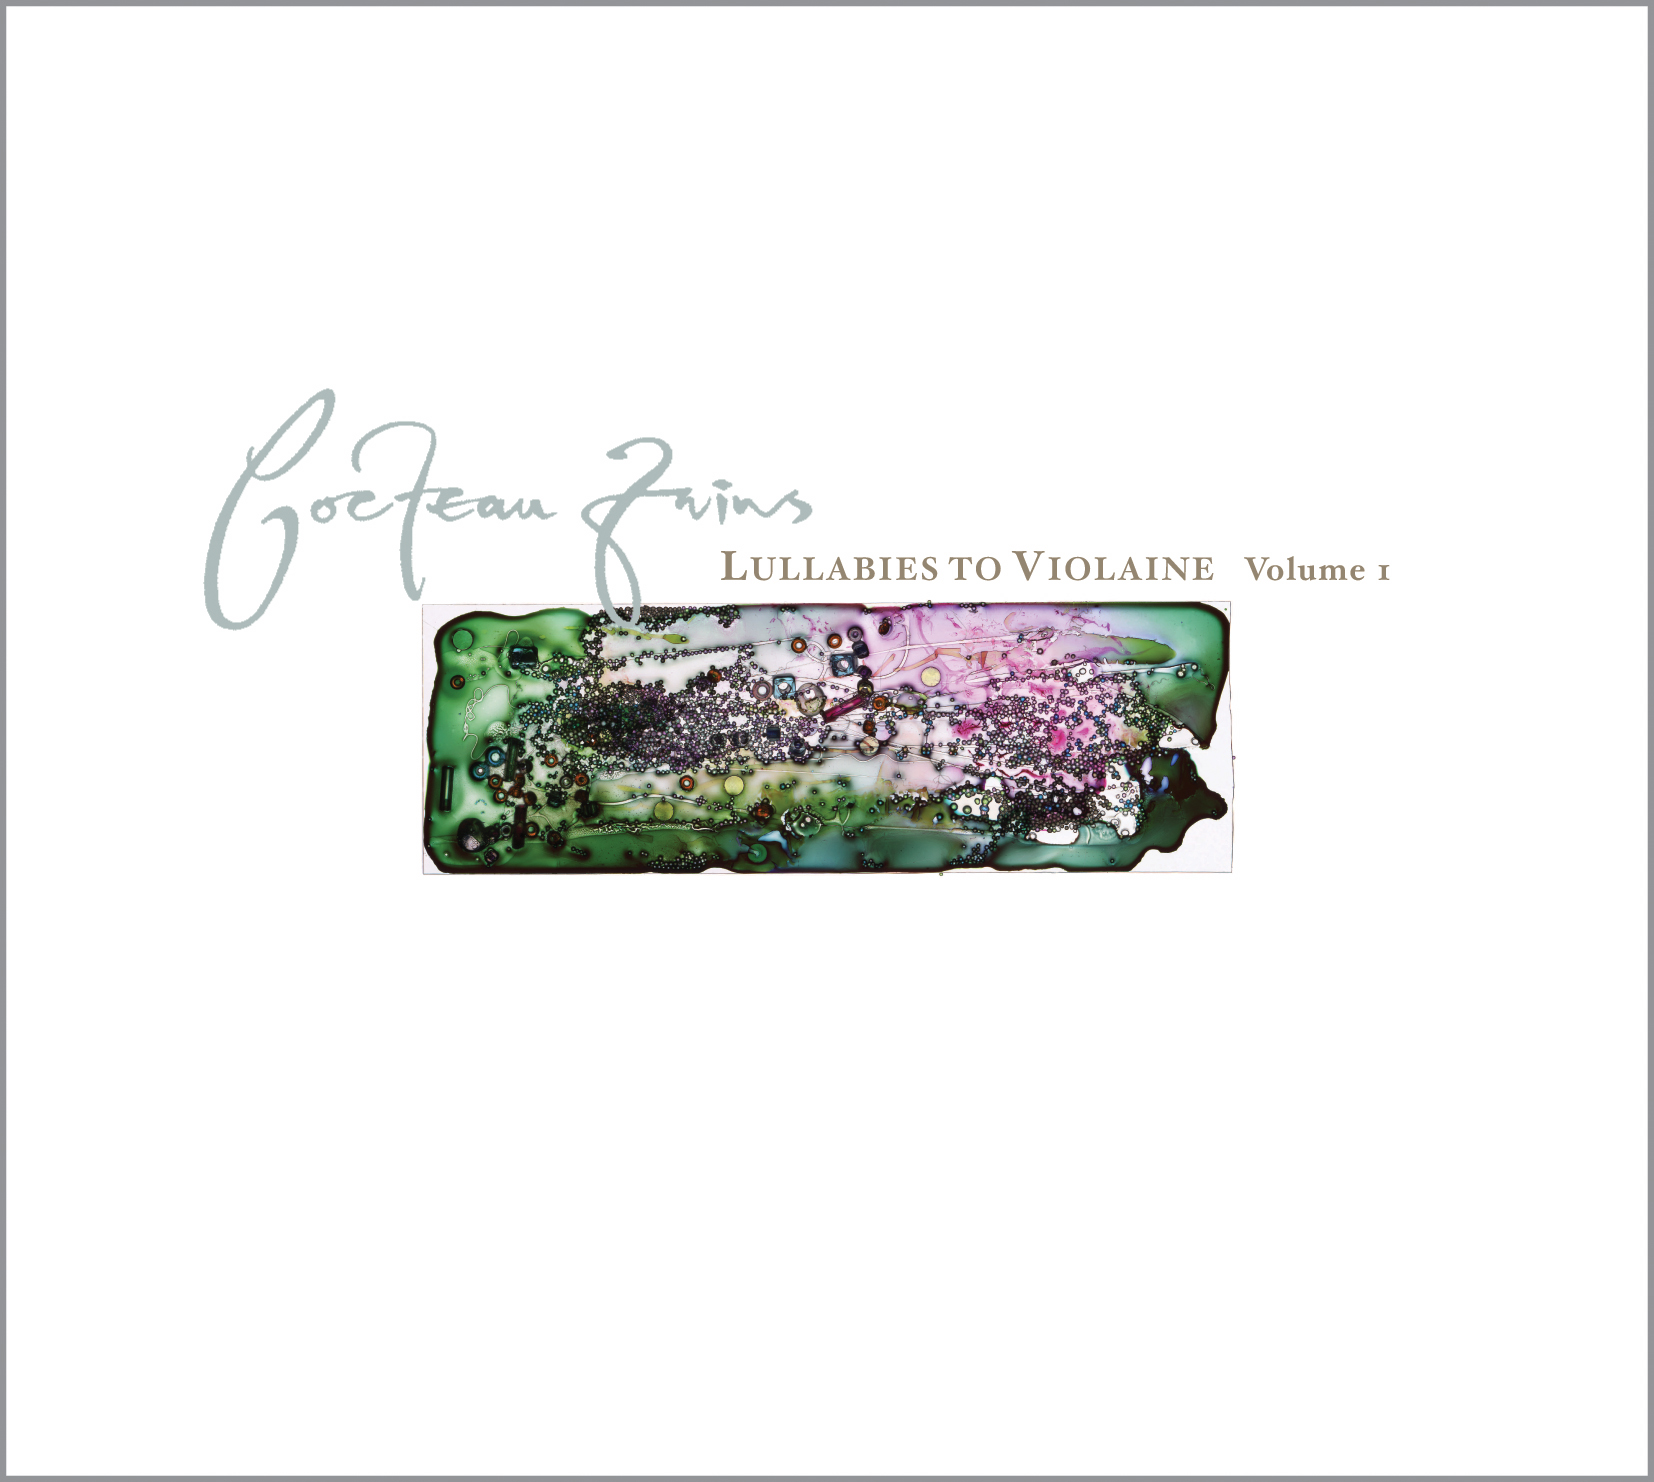 Cocteau Twins - Lullabies to Violaine vol 1 - 2xCD